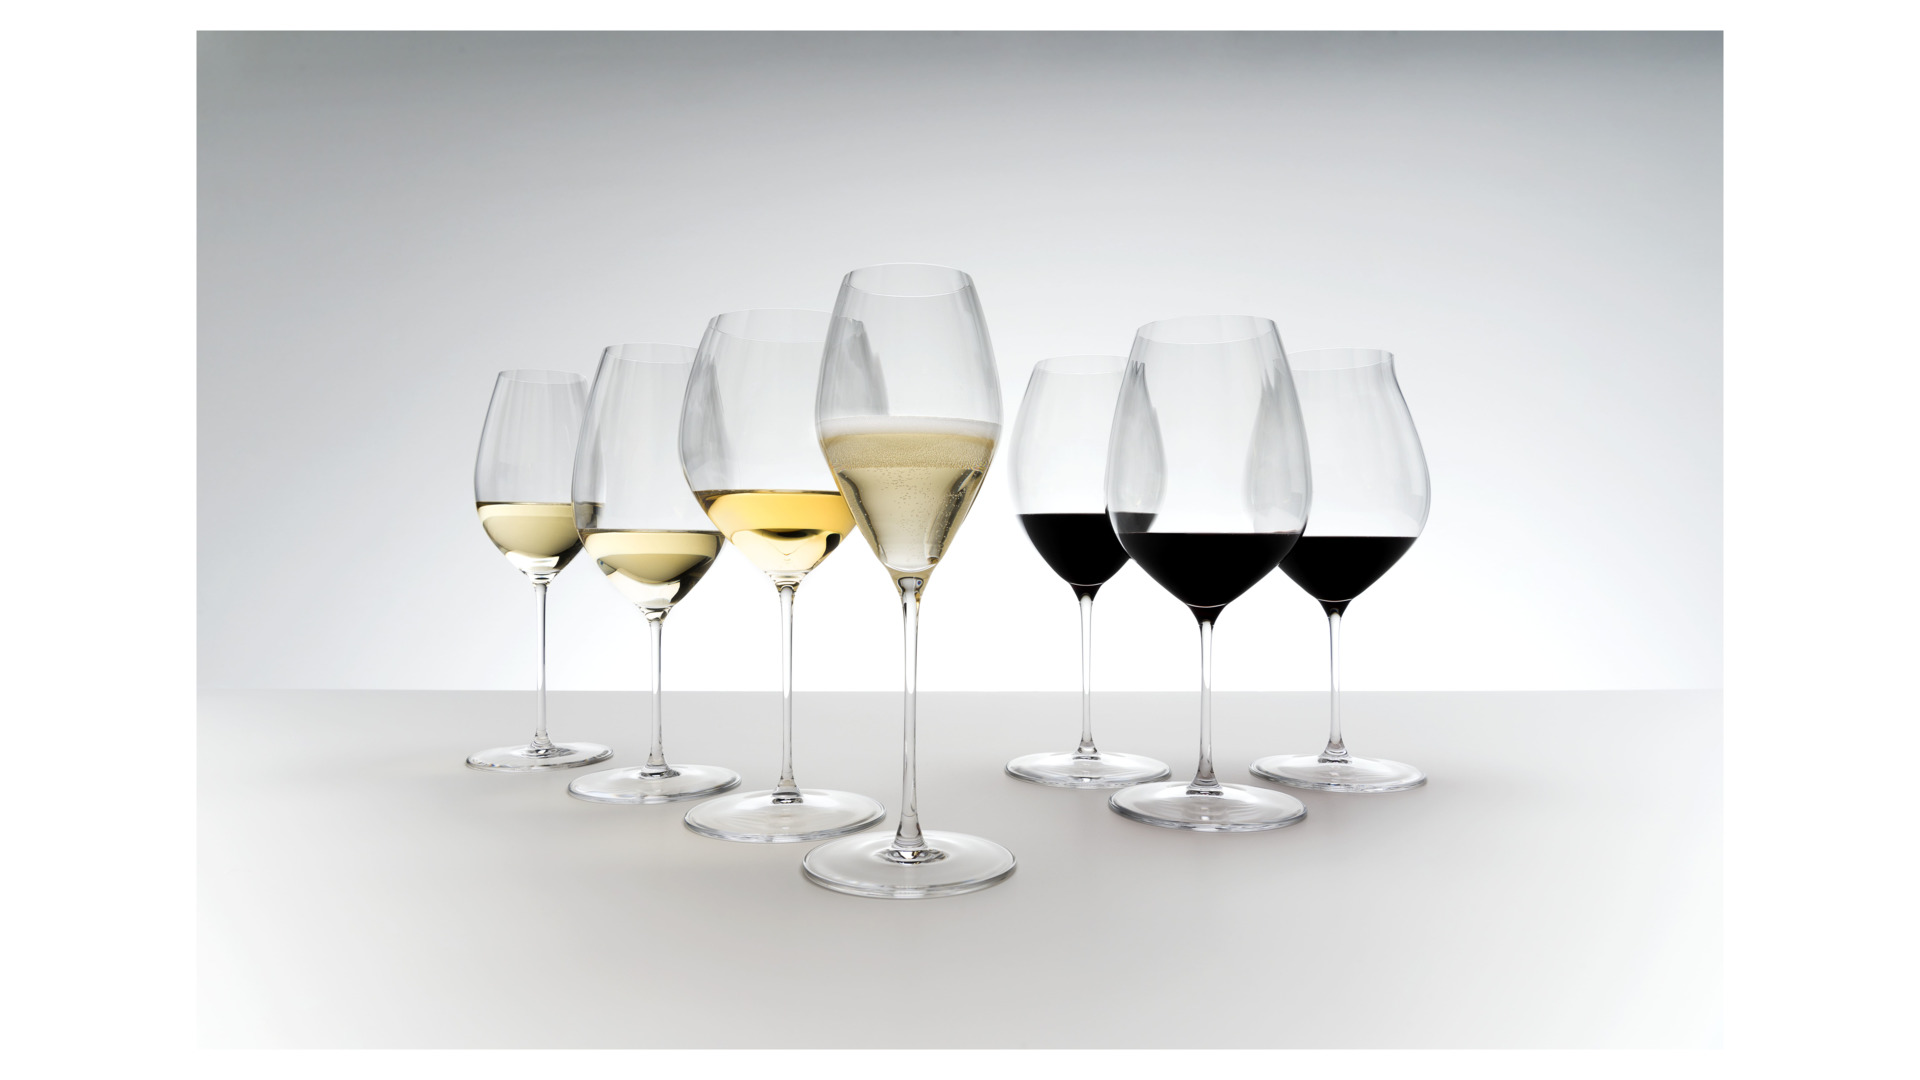 Набор бокалов для красного вина Riedel Performance Syrah/Shiraz 631мл,H24,5см, 2шт, стекло хрустальн